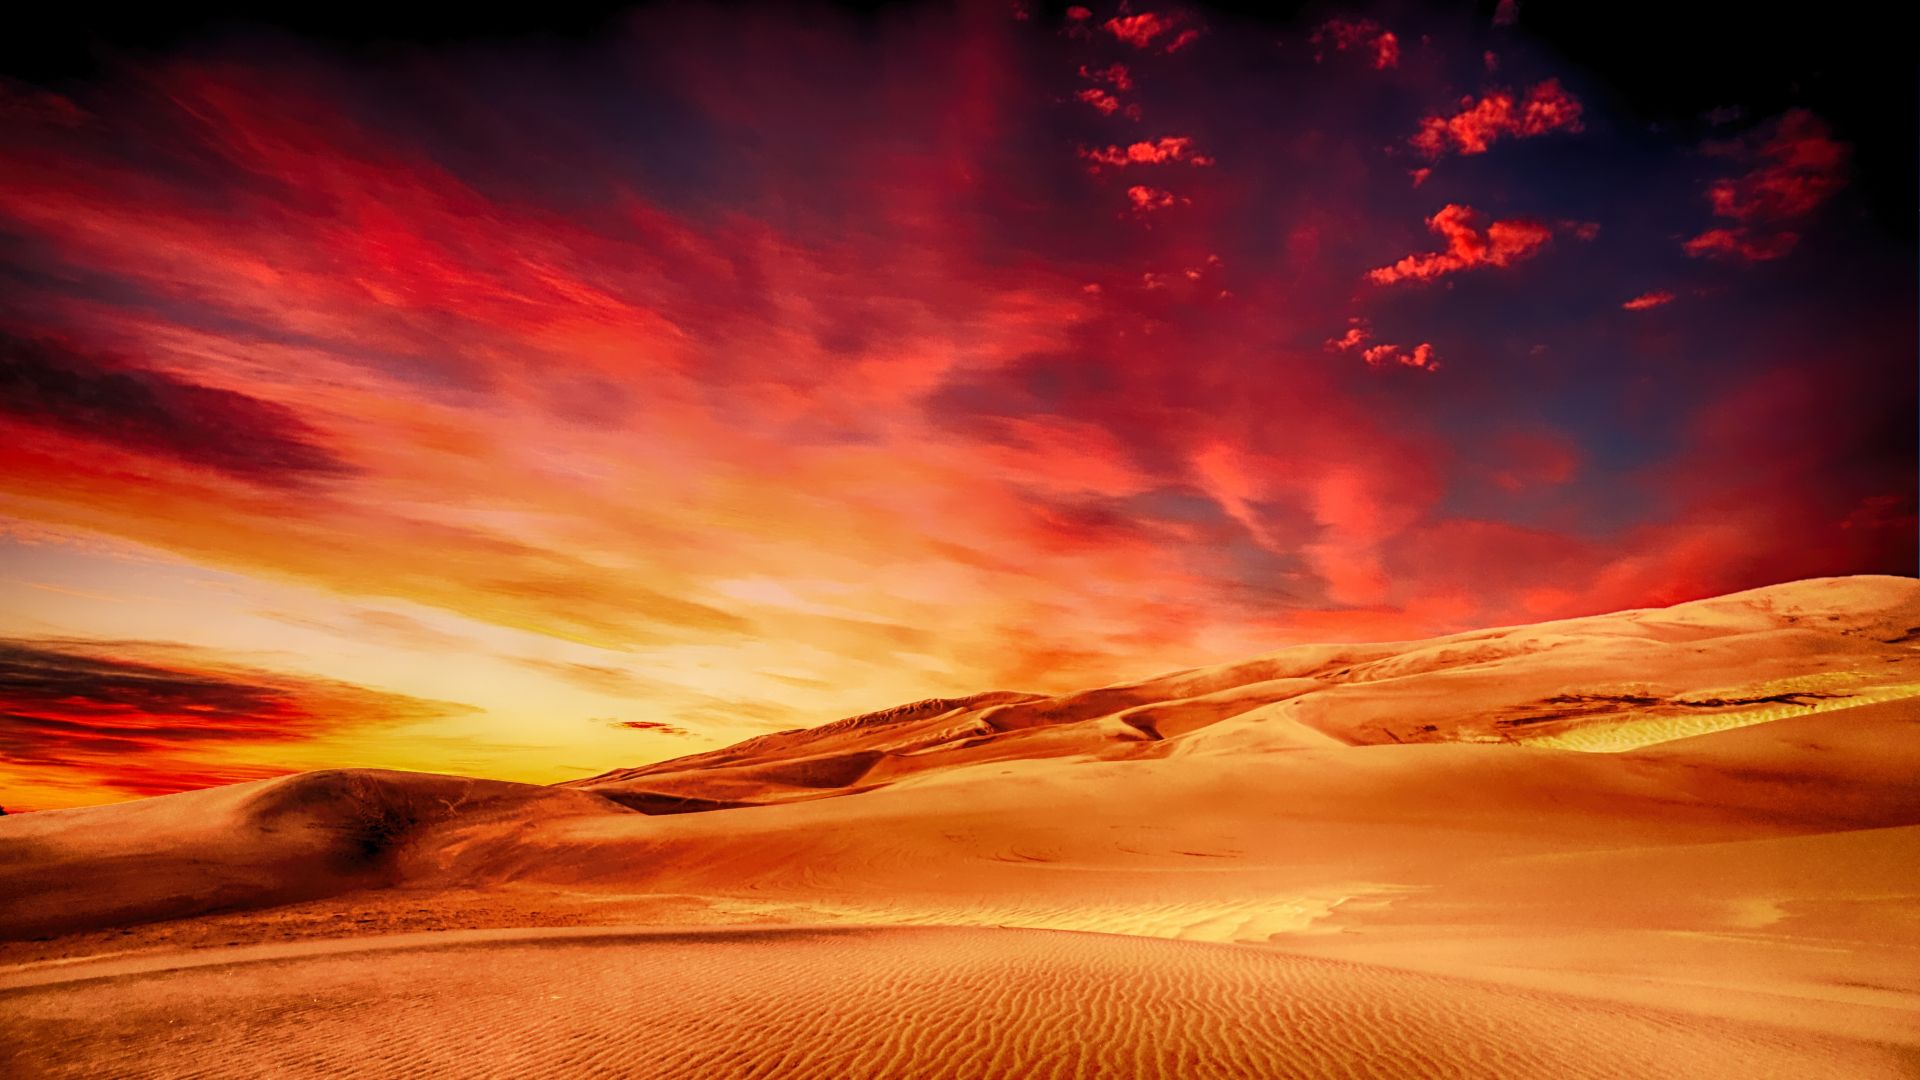 199100 Desert Sunset Stock Photos Pictures  RoyaltyFree Images   iStock  Sunset Desert Desert sunrise